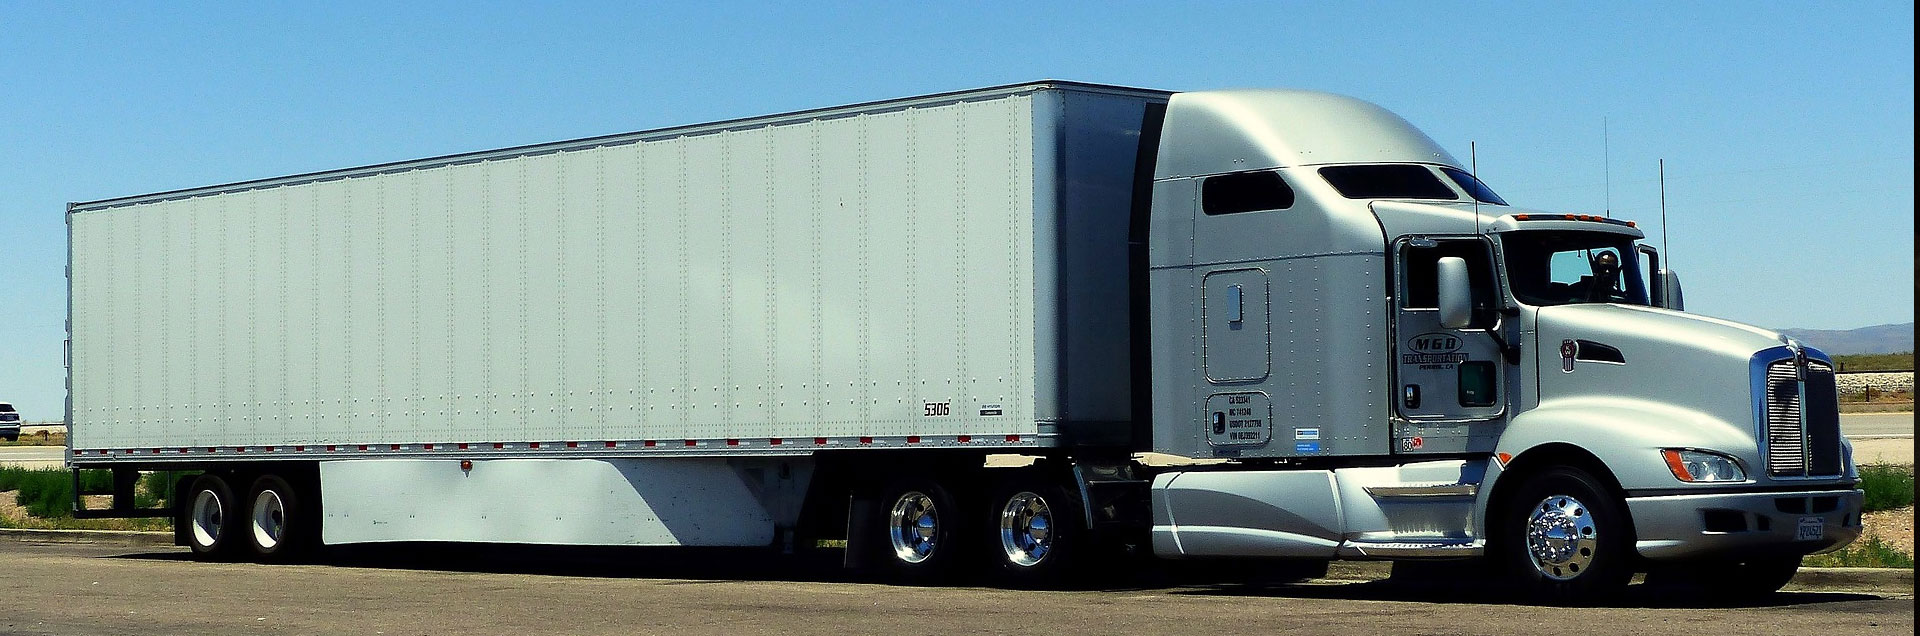 New study shows technology can prevent truck wrecks